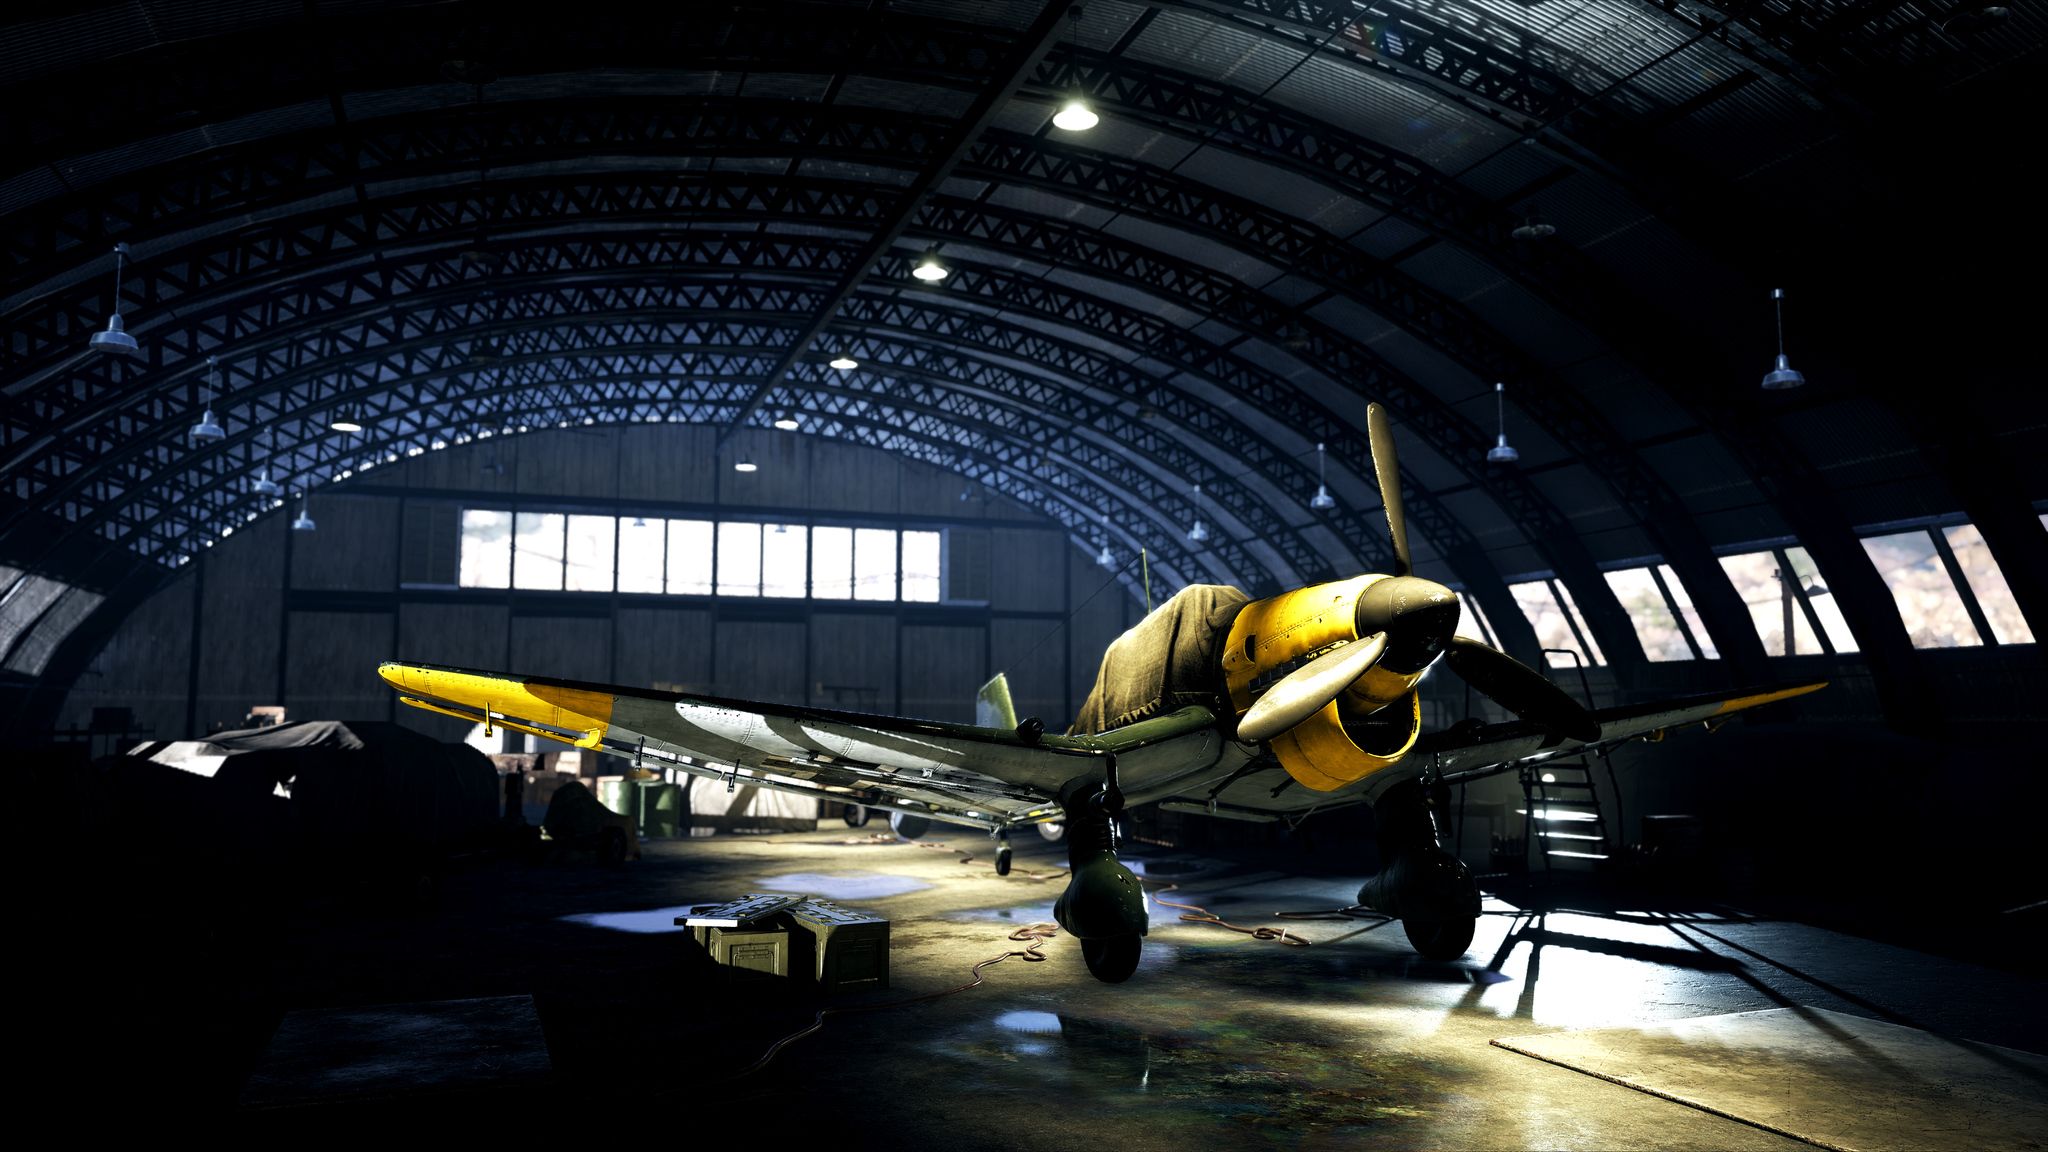 Hangar by FLX-II